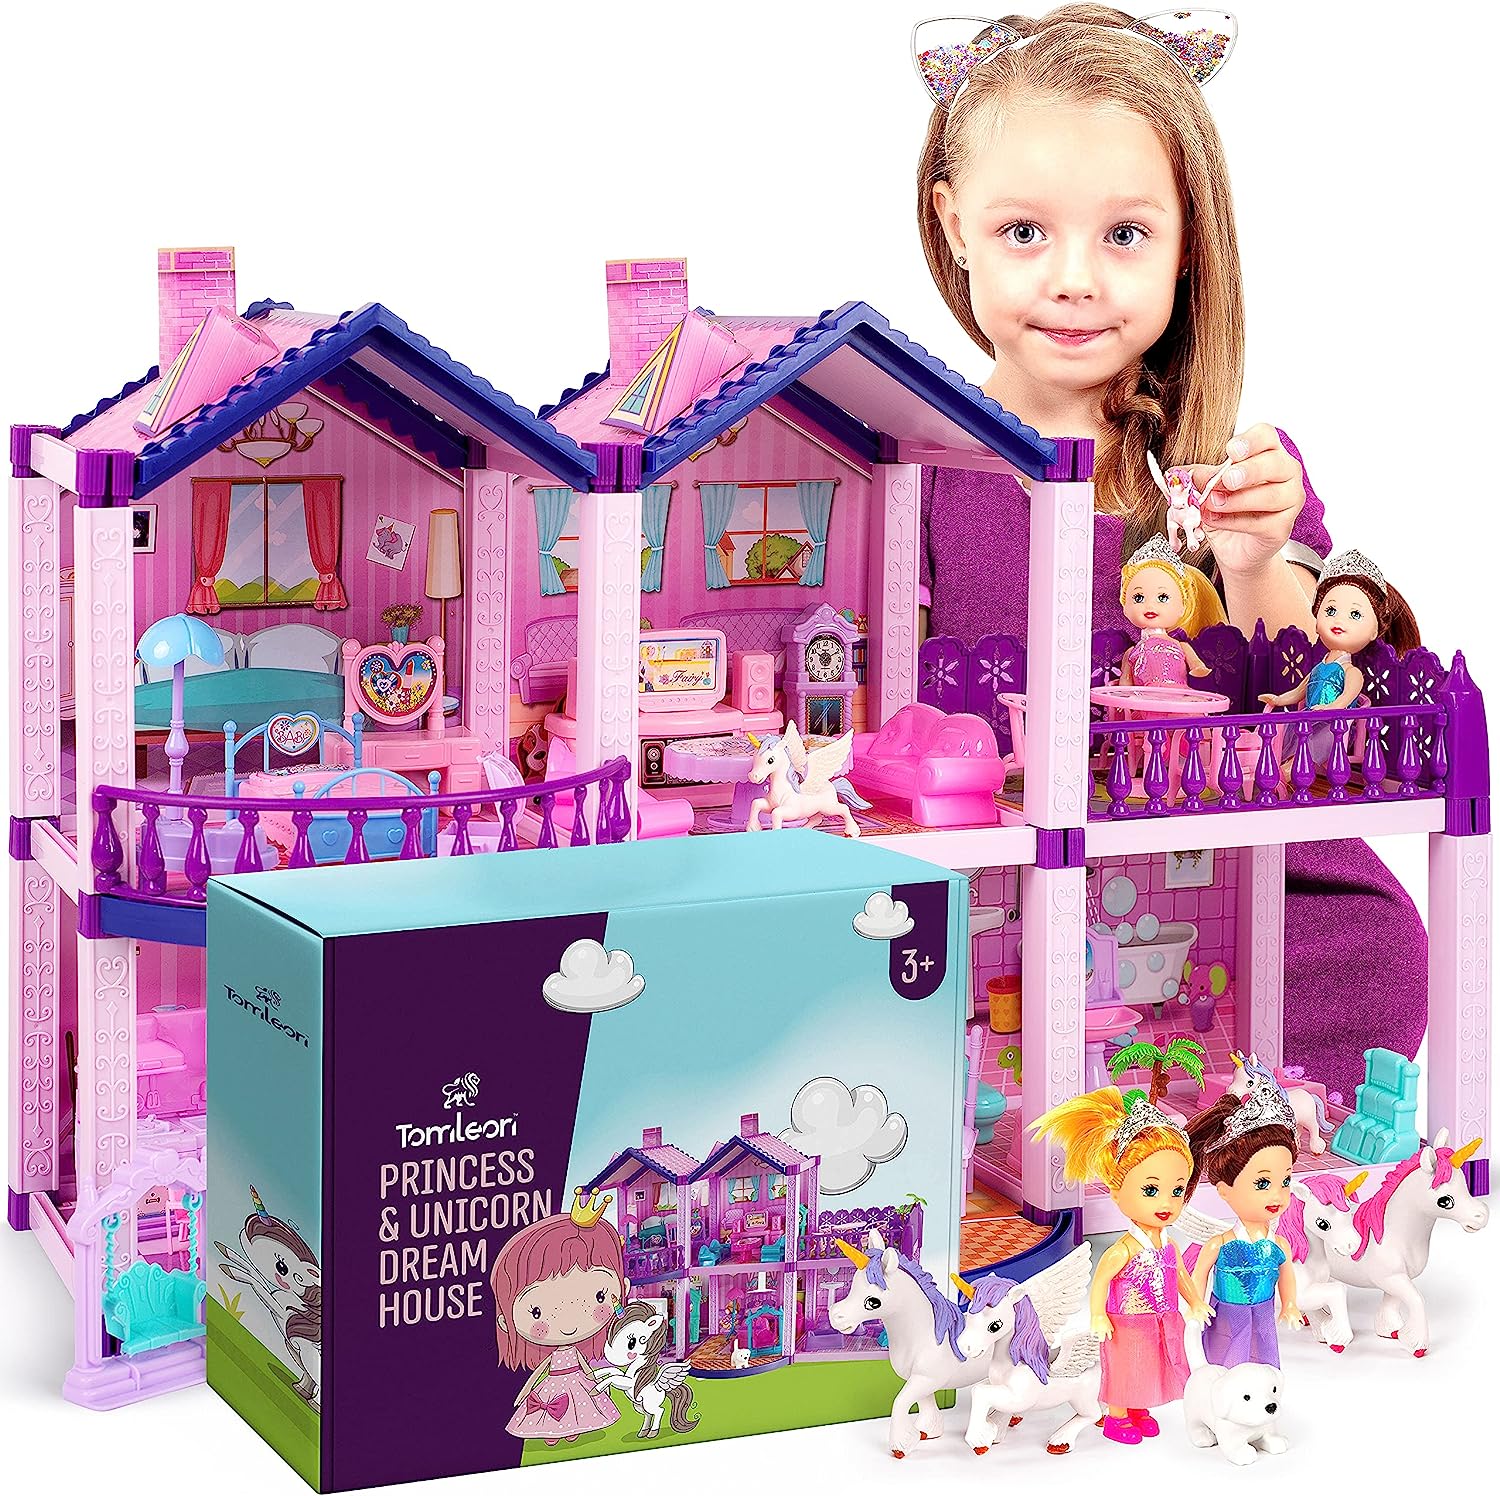 Casa de muñecas con princesas